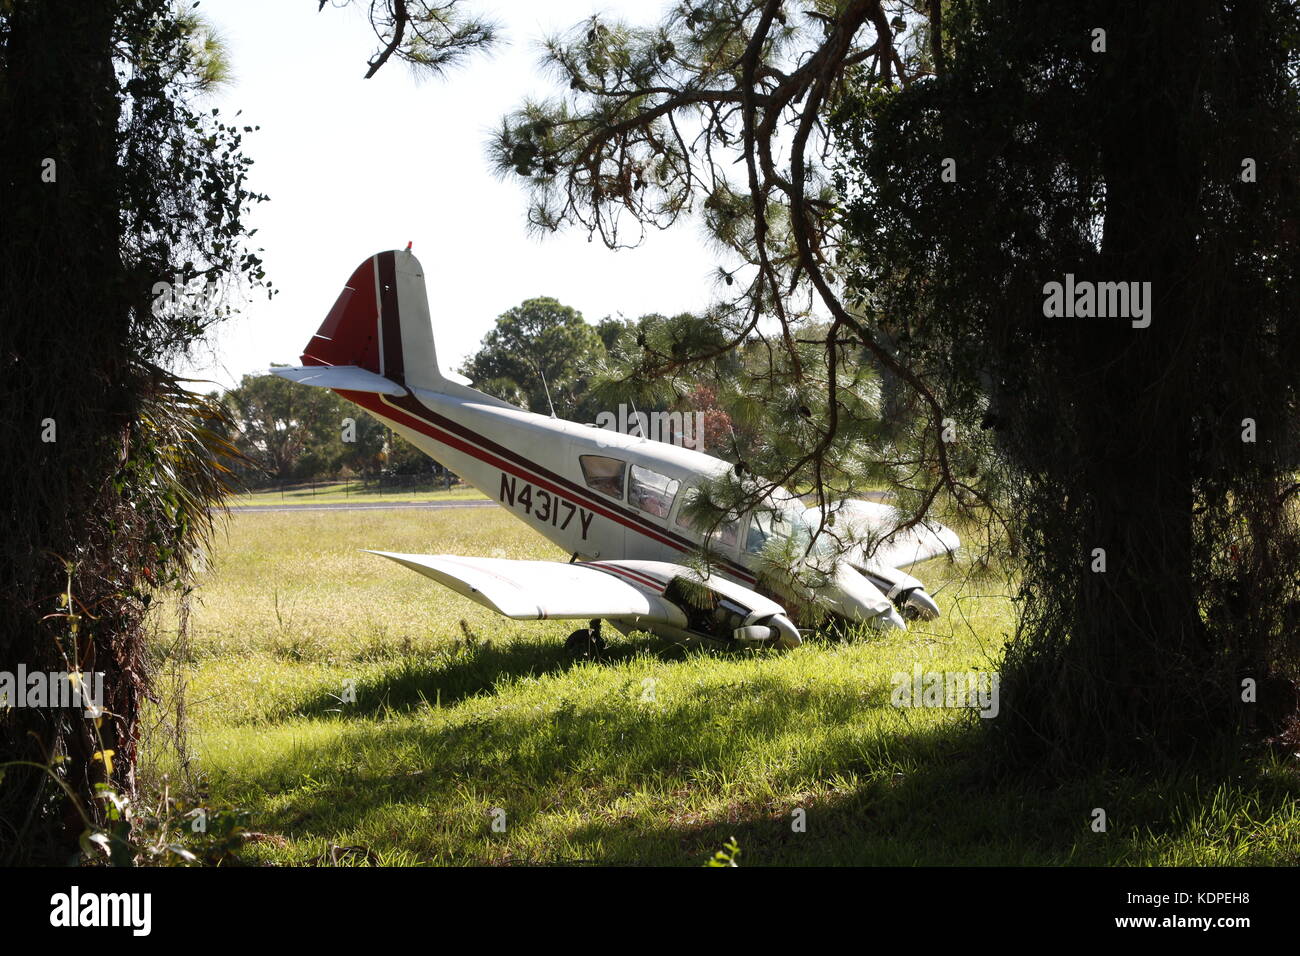 Crashed small plane Stock Photo